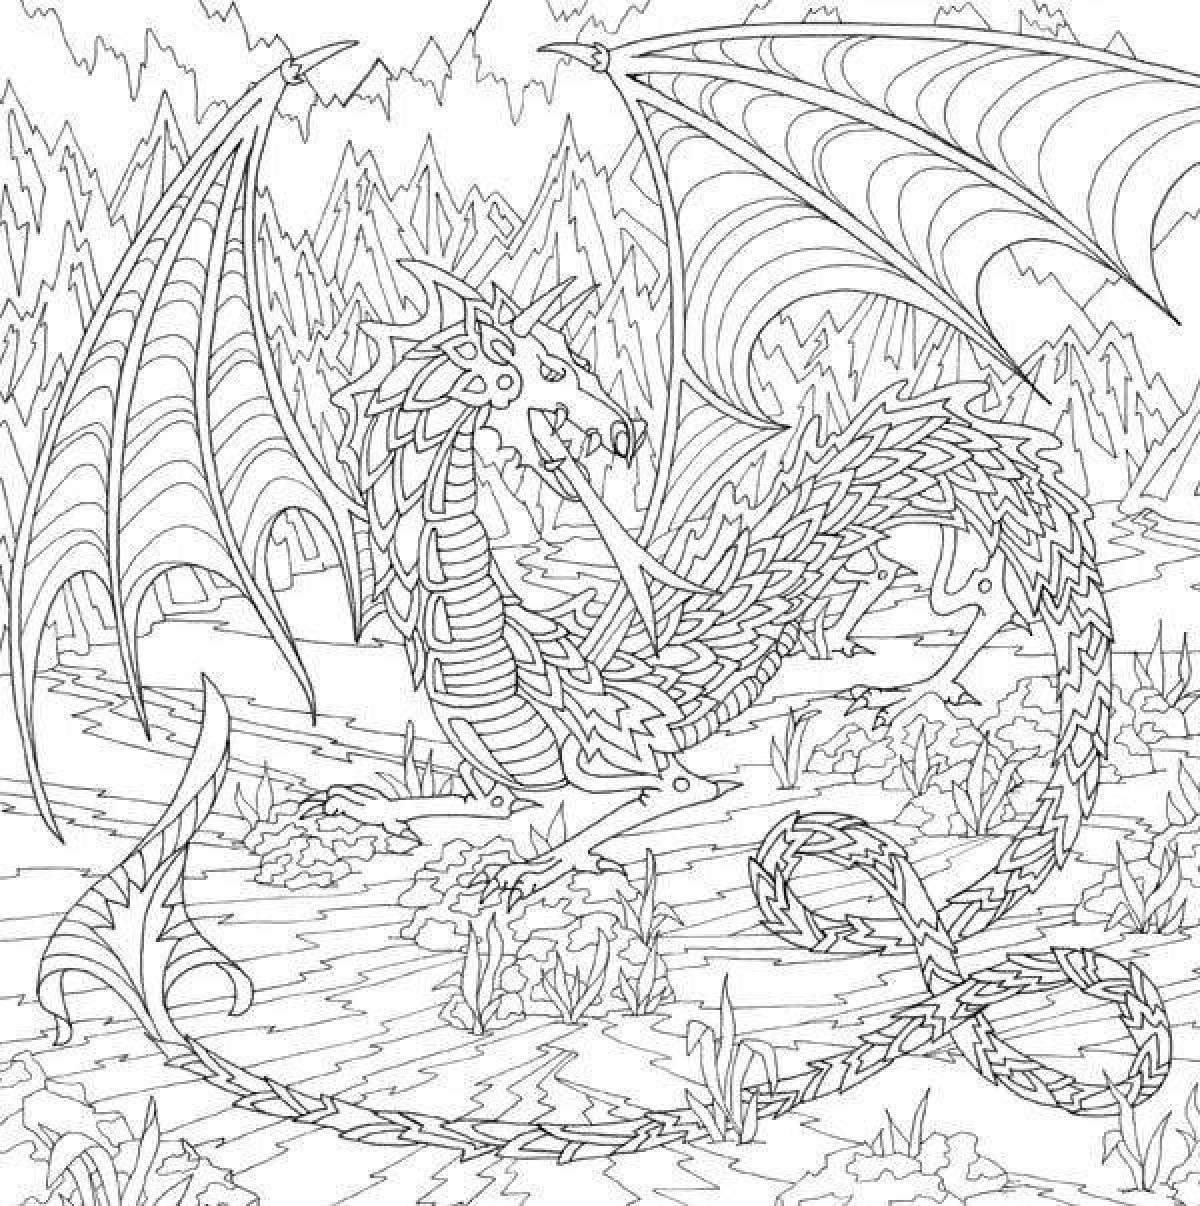 Exquisite coloring dragon complex